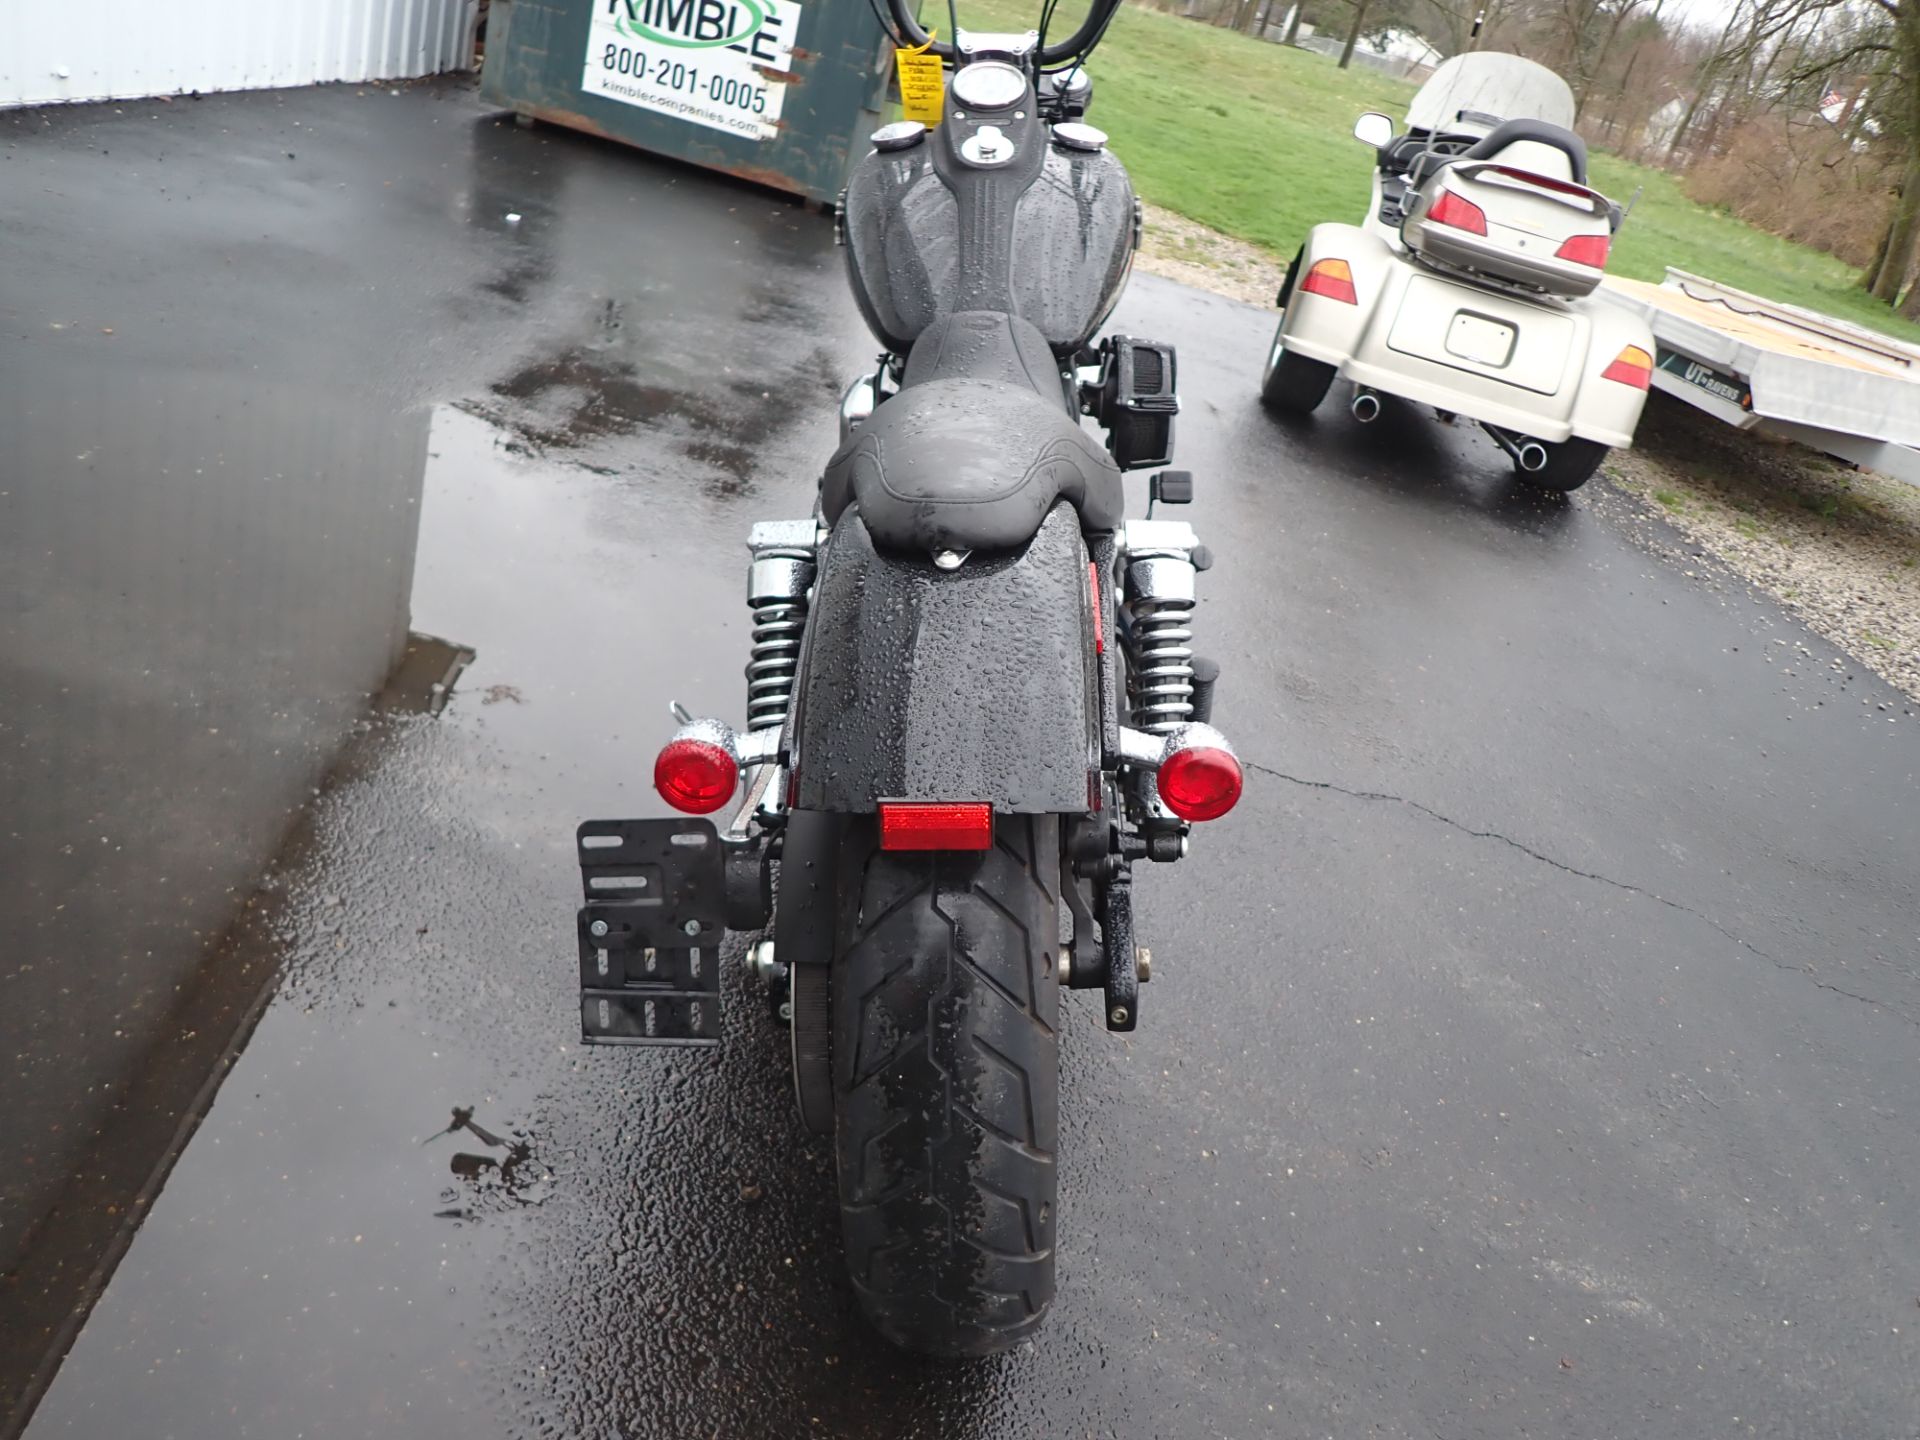 2013 Harley-Davidson Dyna® Street Bob® in Massillon, Ohio - Photo 4